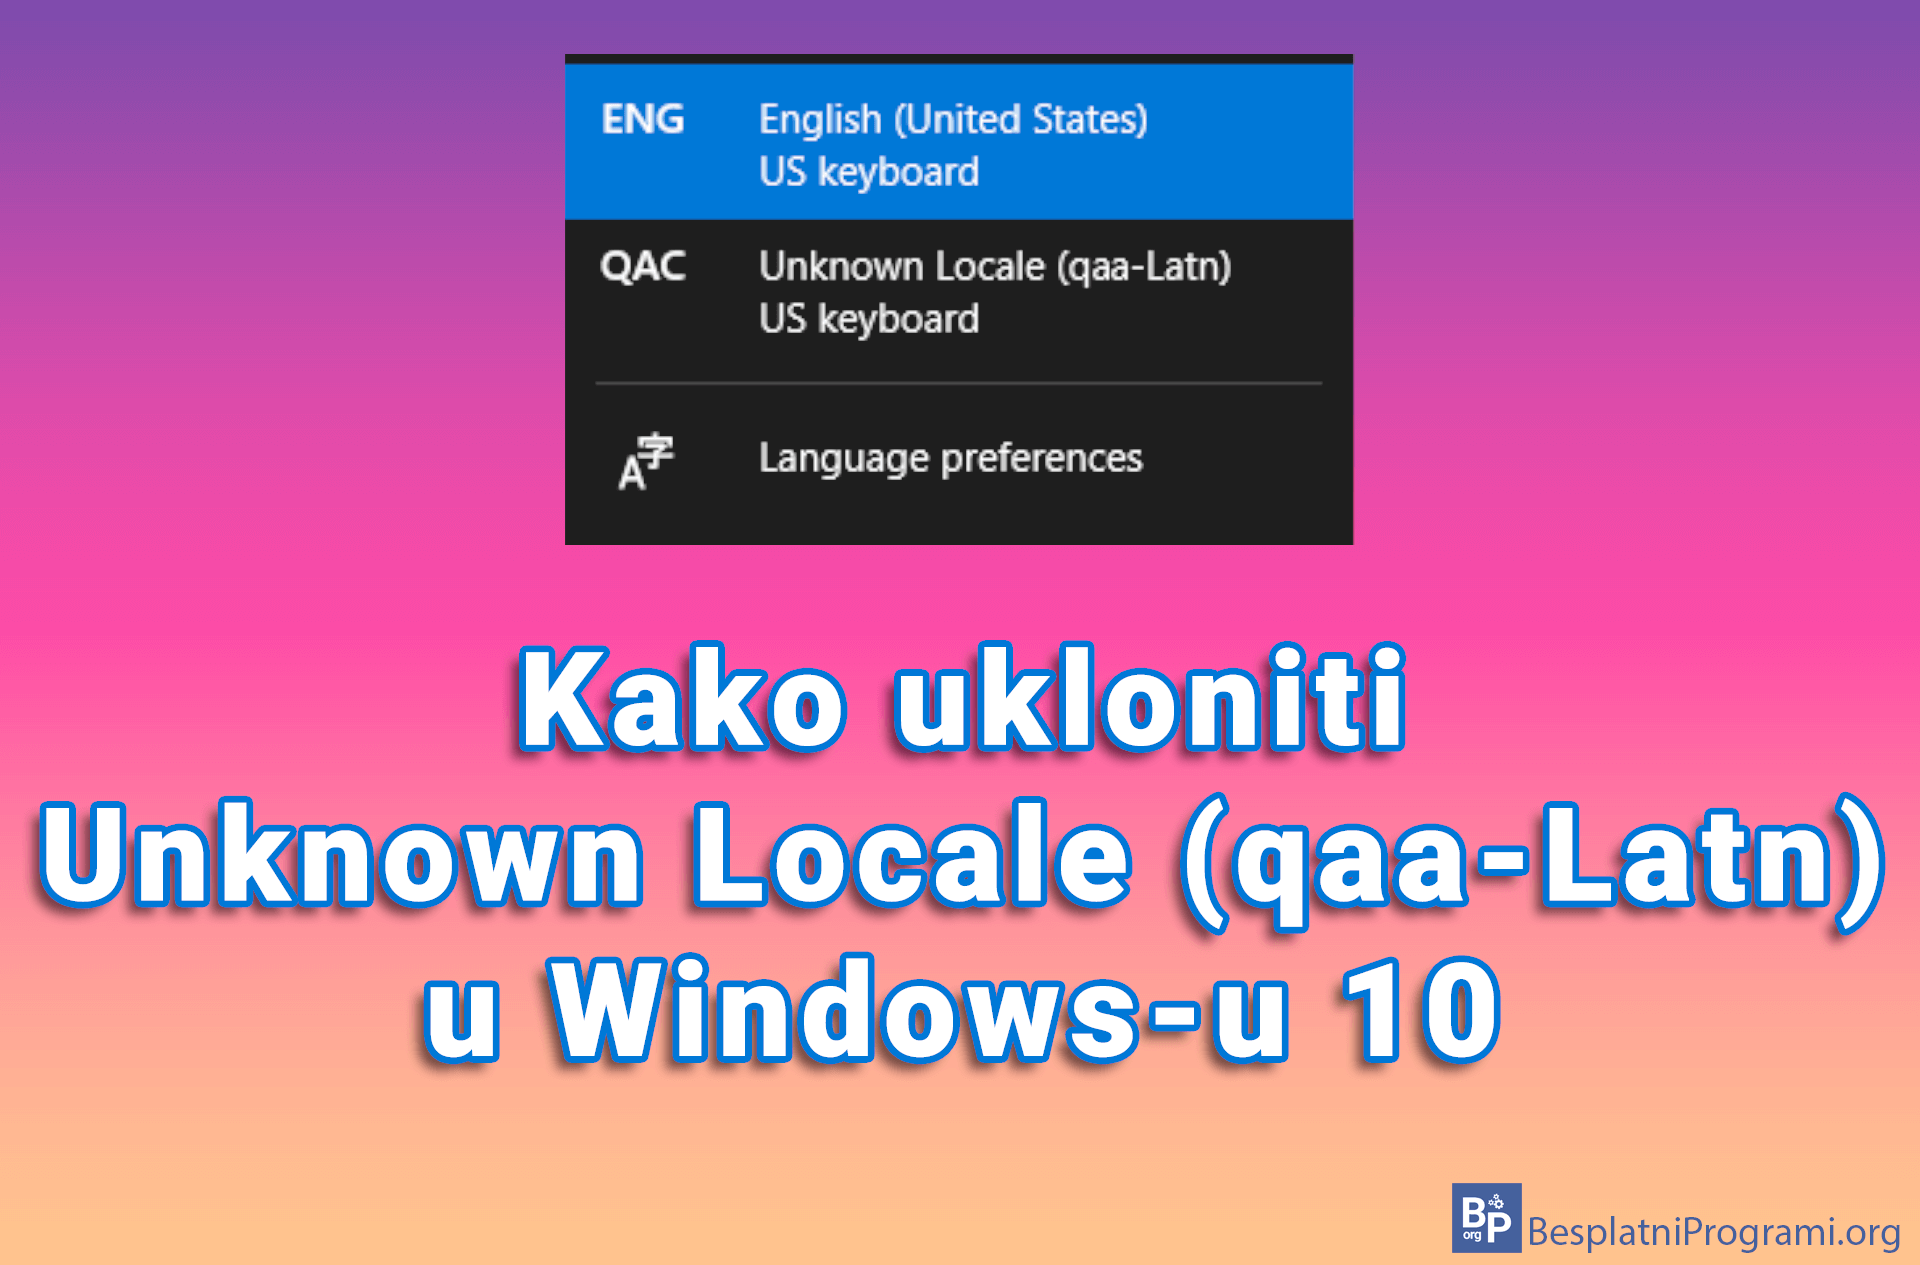 Kako ukloniti Unknown Locale (qaa-Latn) u Windows-u 10